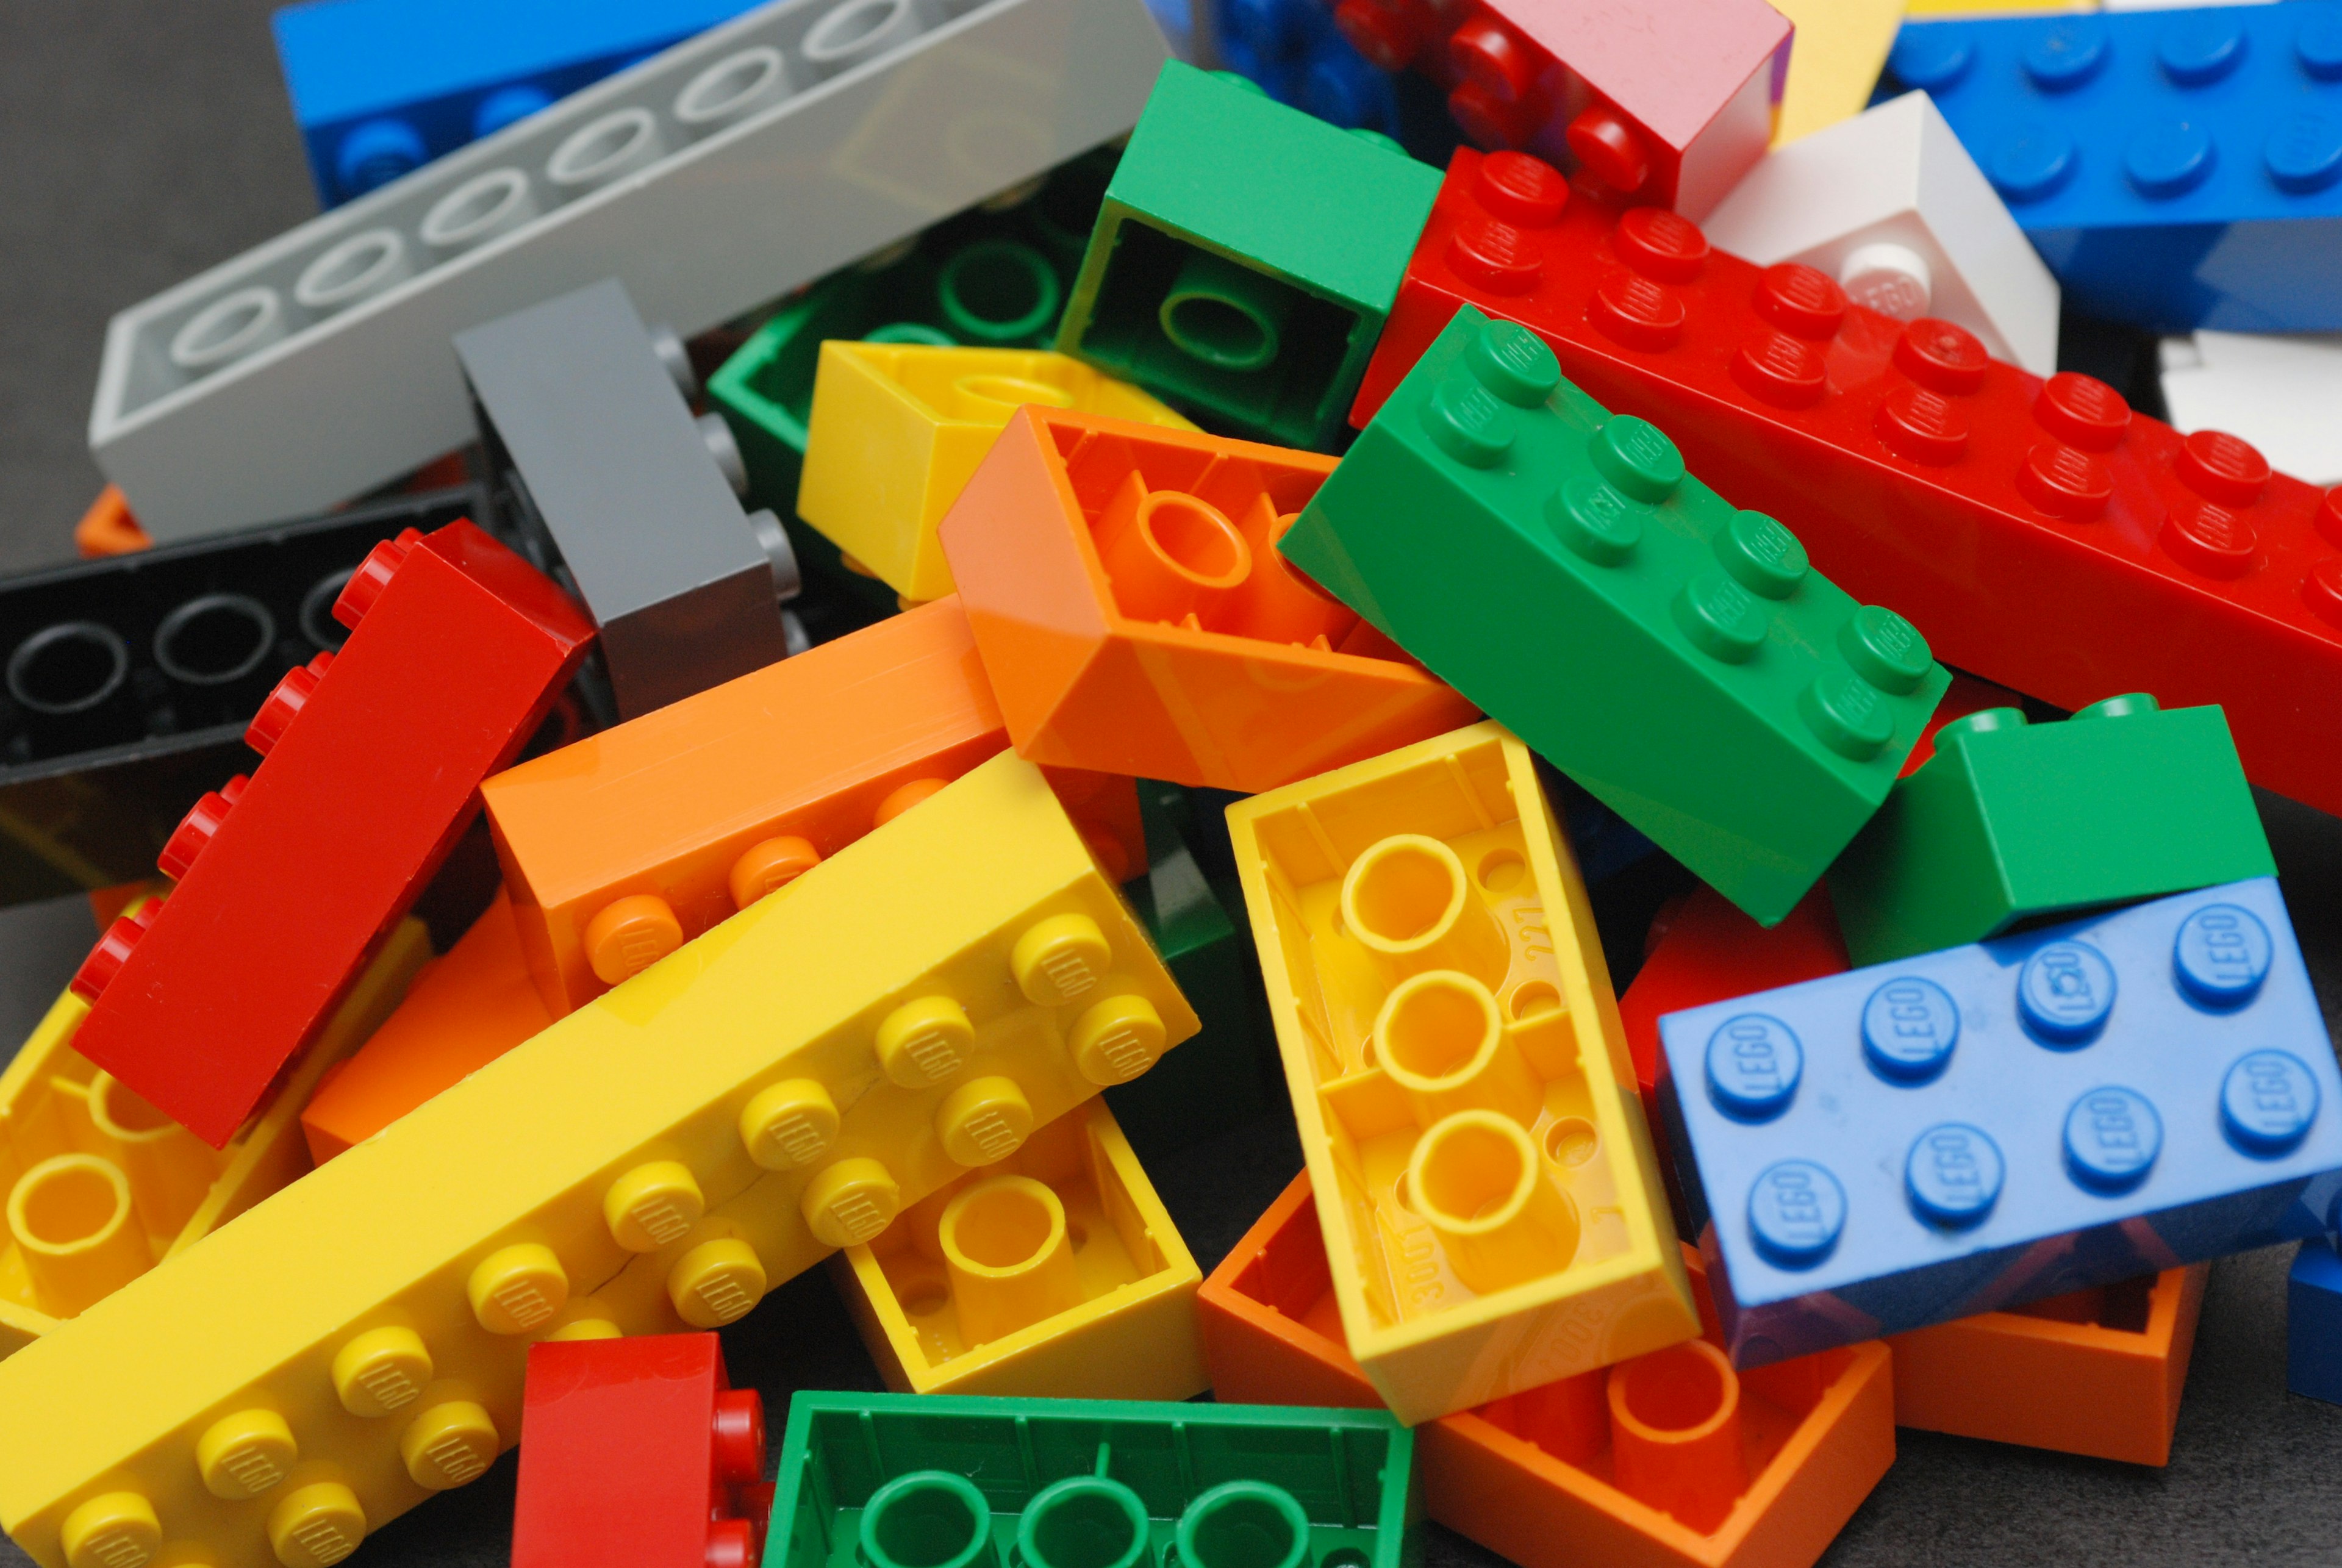 A pile of colored LEGO bricks